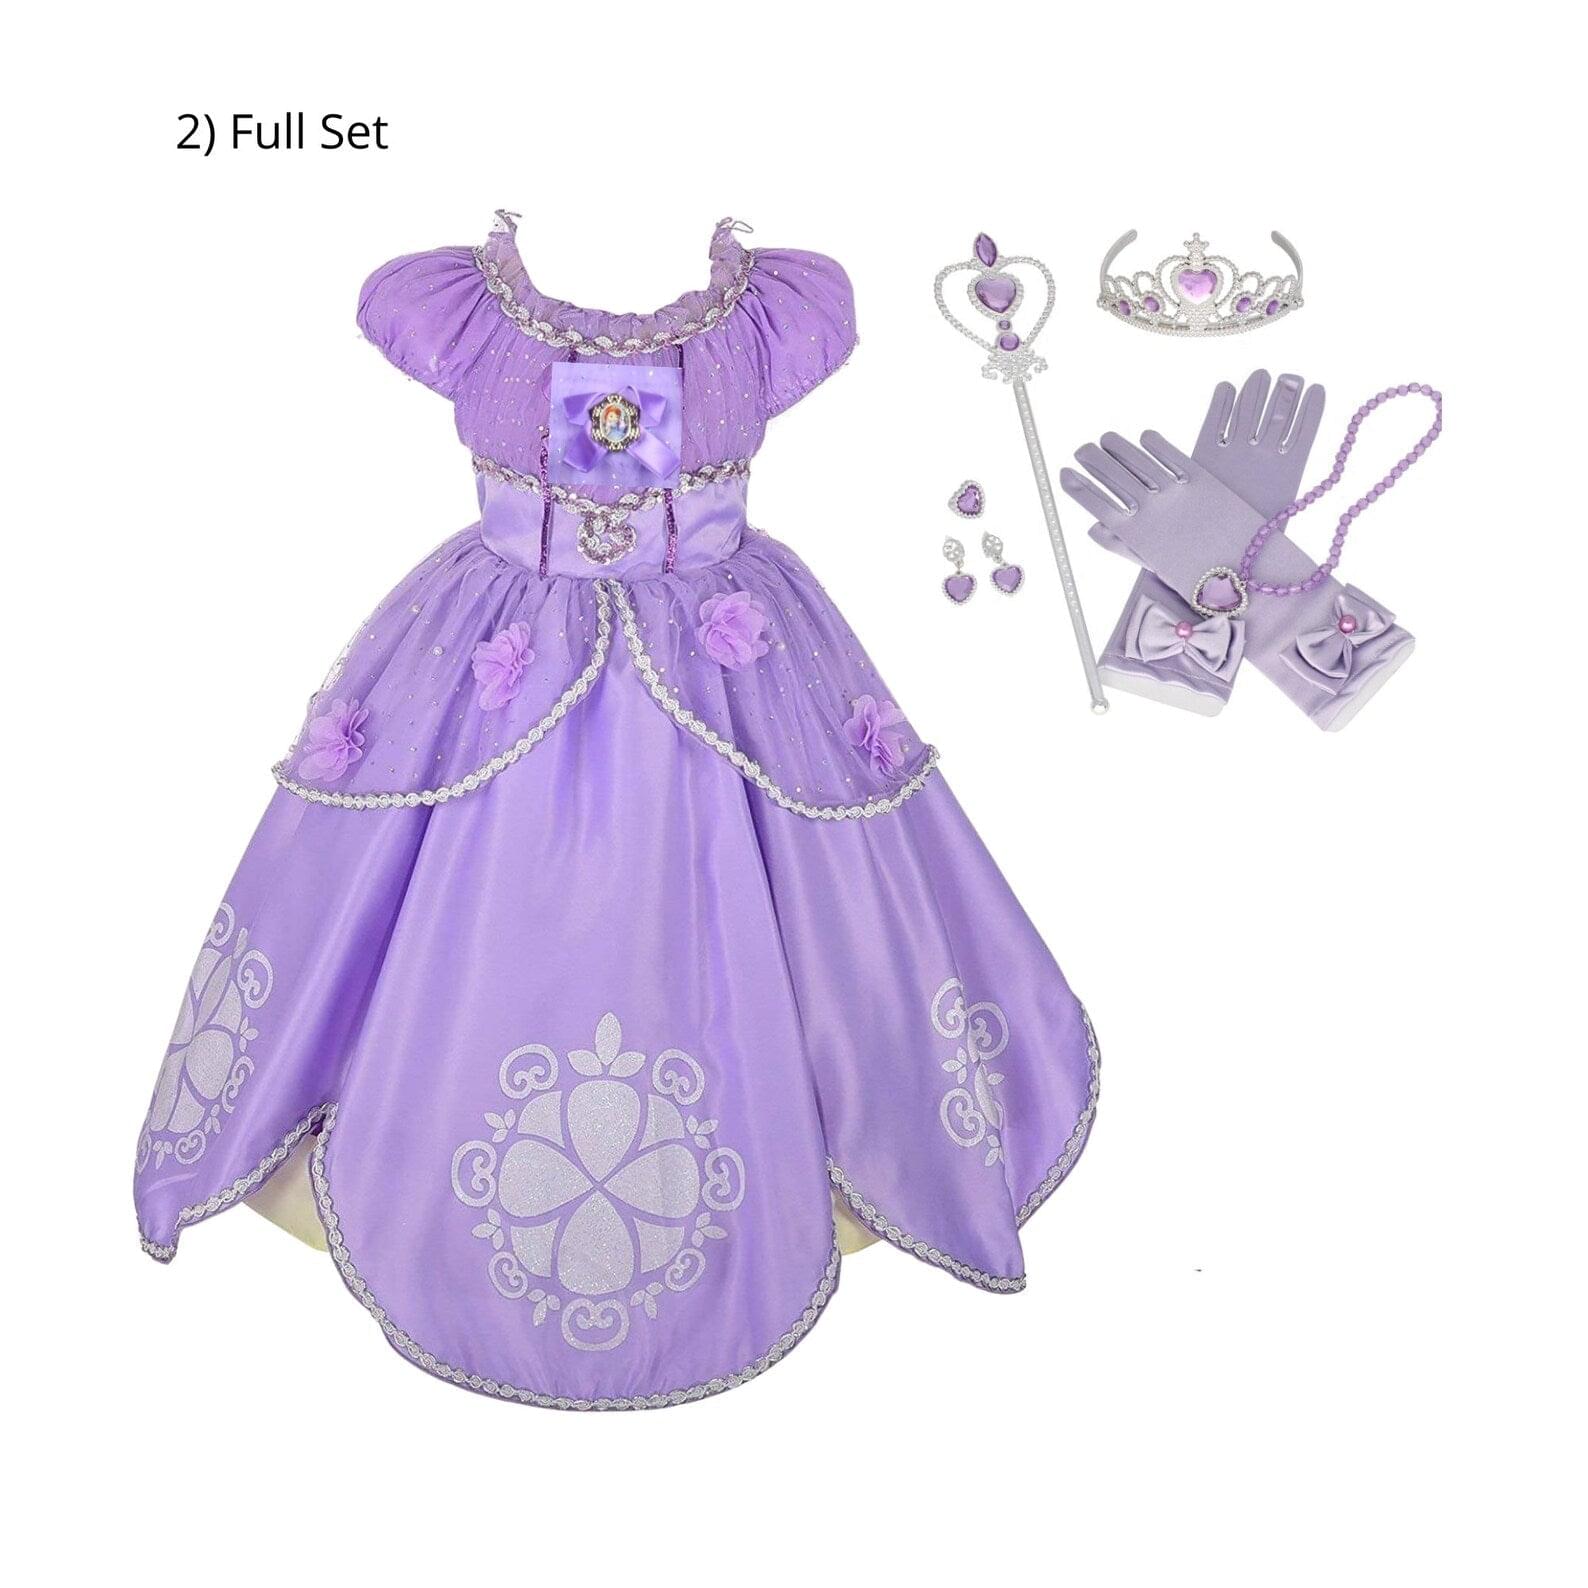 Disney-Inspired Sofia the First Birthday Dress for Little Princesses Full Set